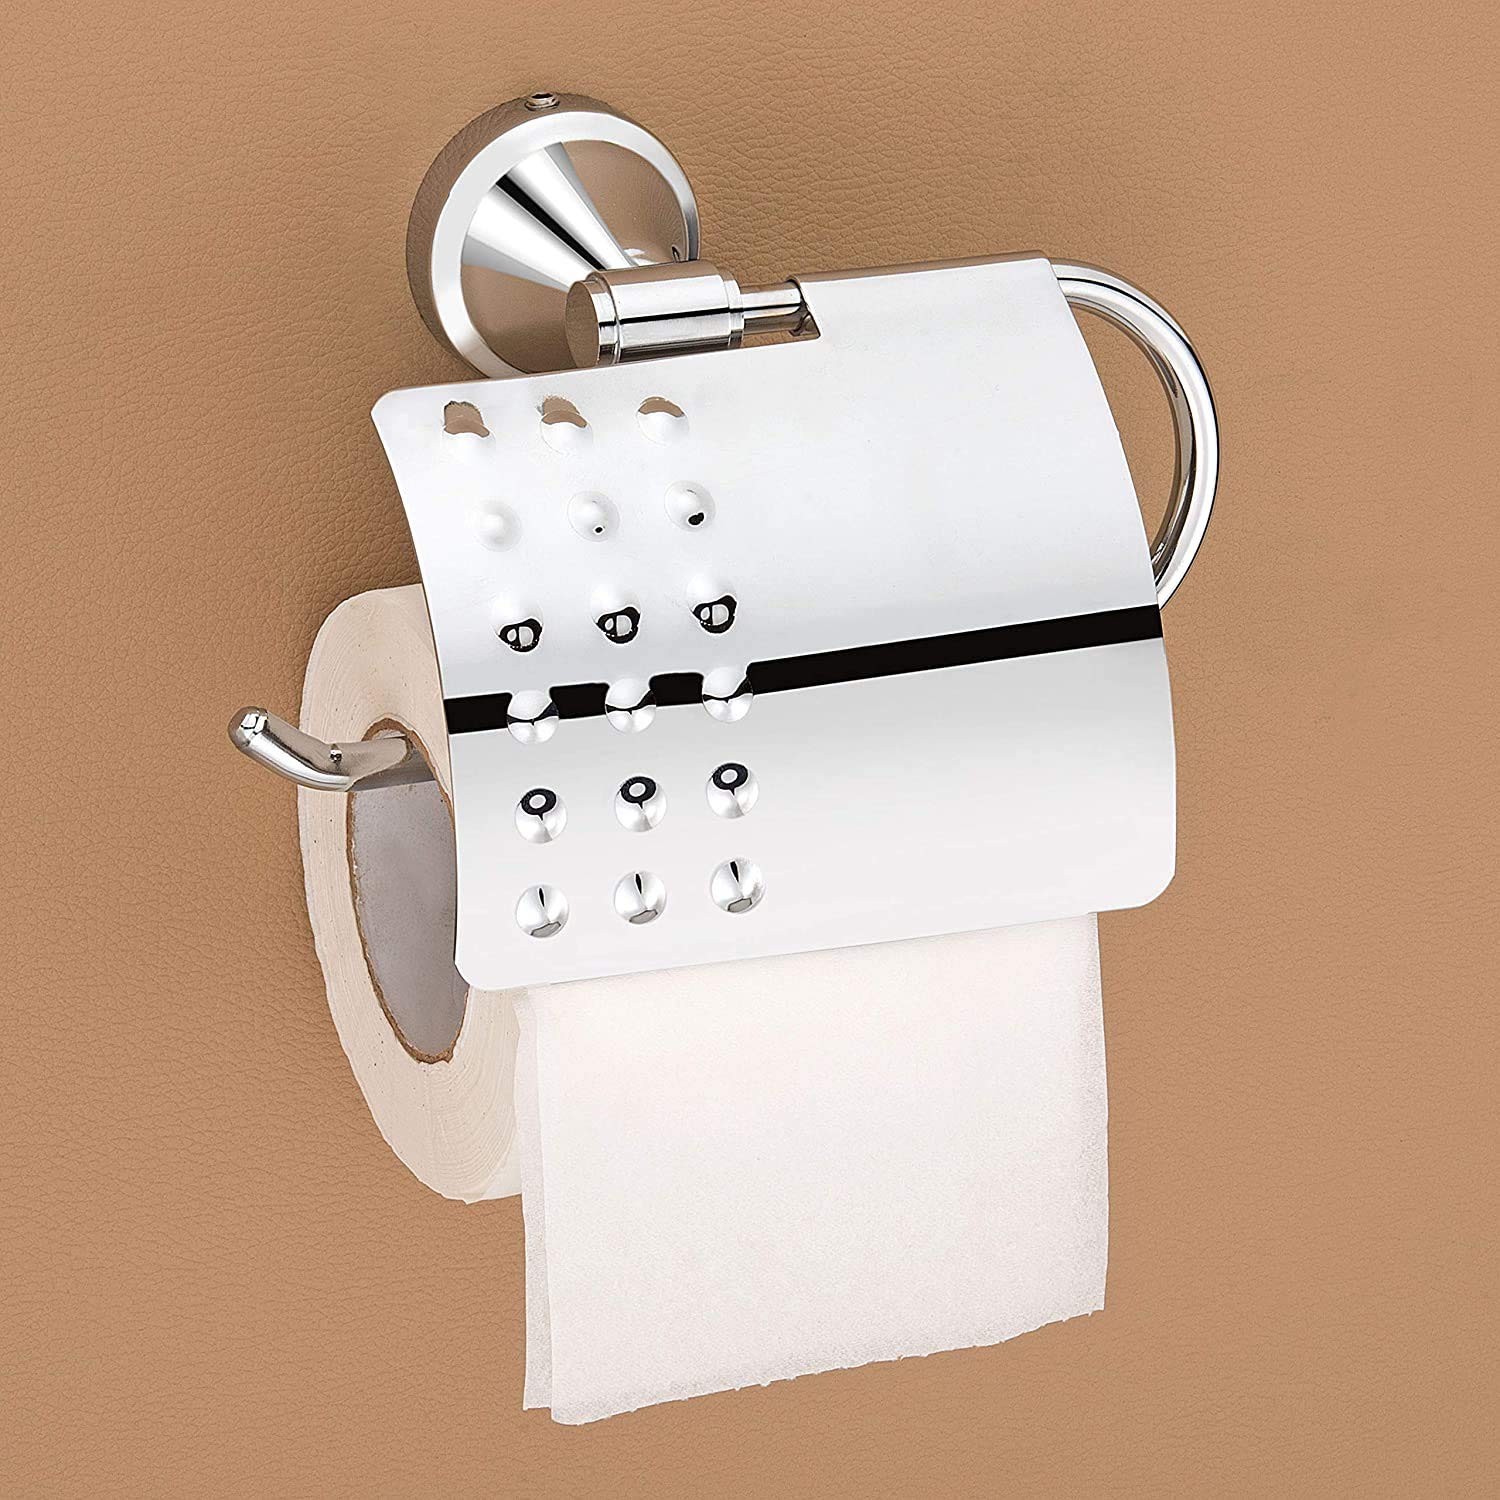 Plantex Platinum Stainless Steel 304 Grade Niko Toilet Paper Roll Holder/Toilet Paper Holder in Bathroom/Kitchen/Bathroom Accessories(Chrome) - Pack of 2